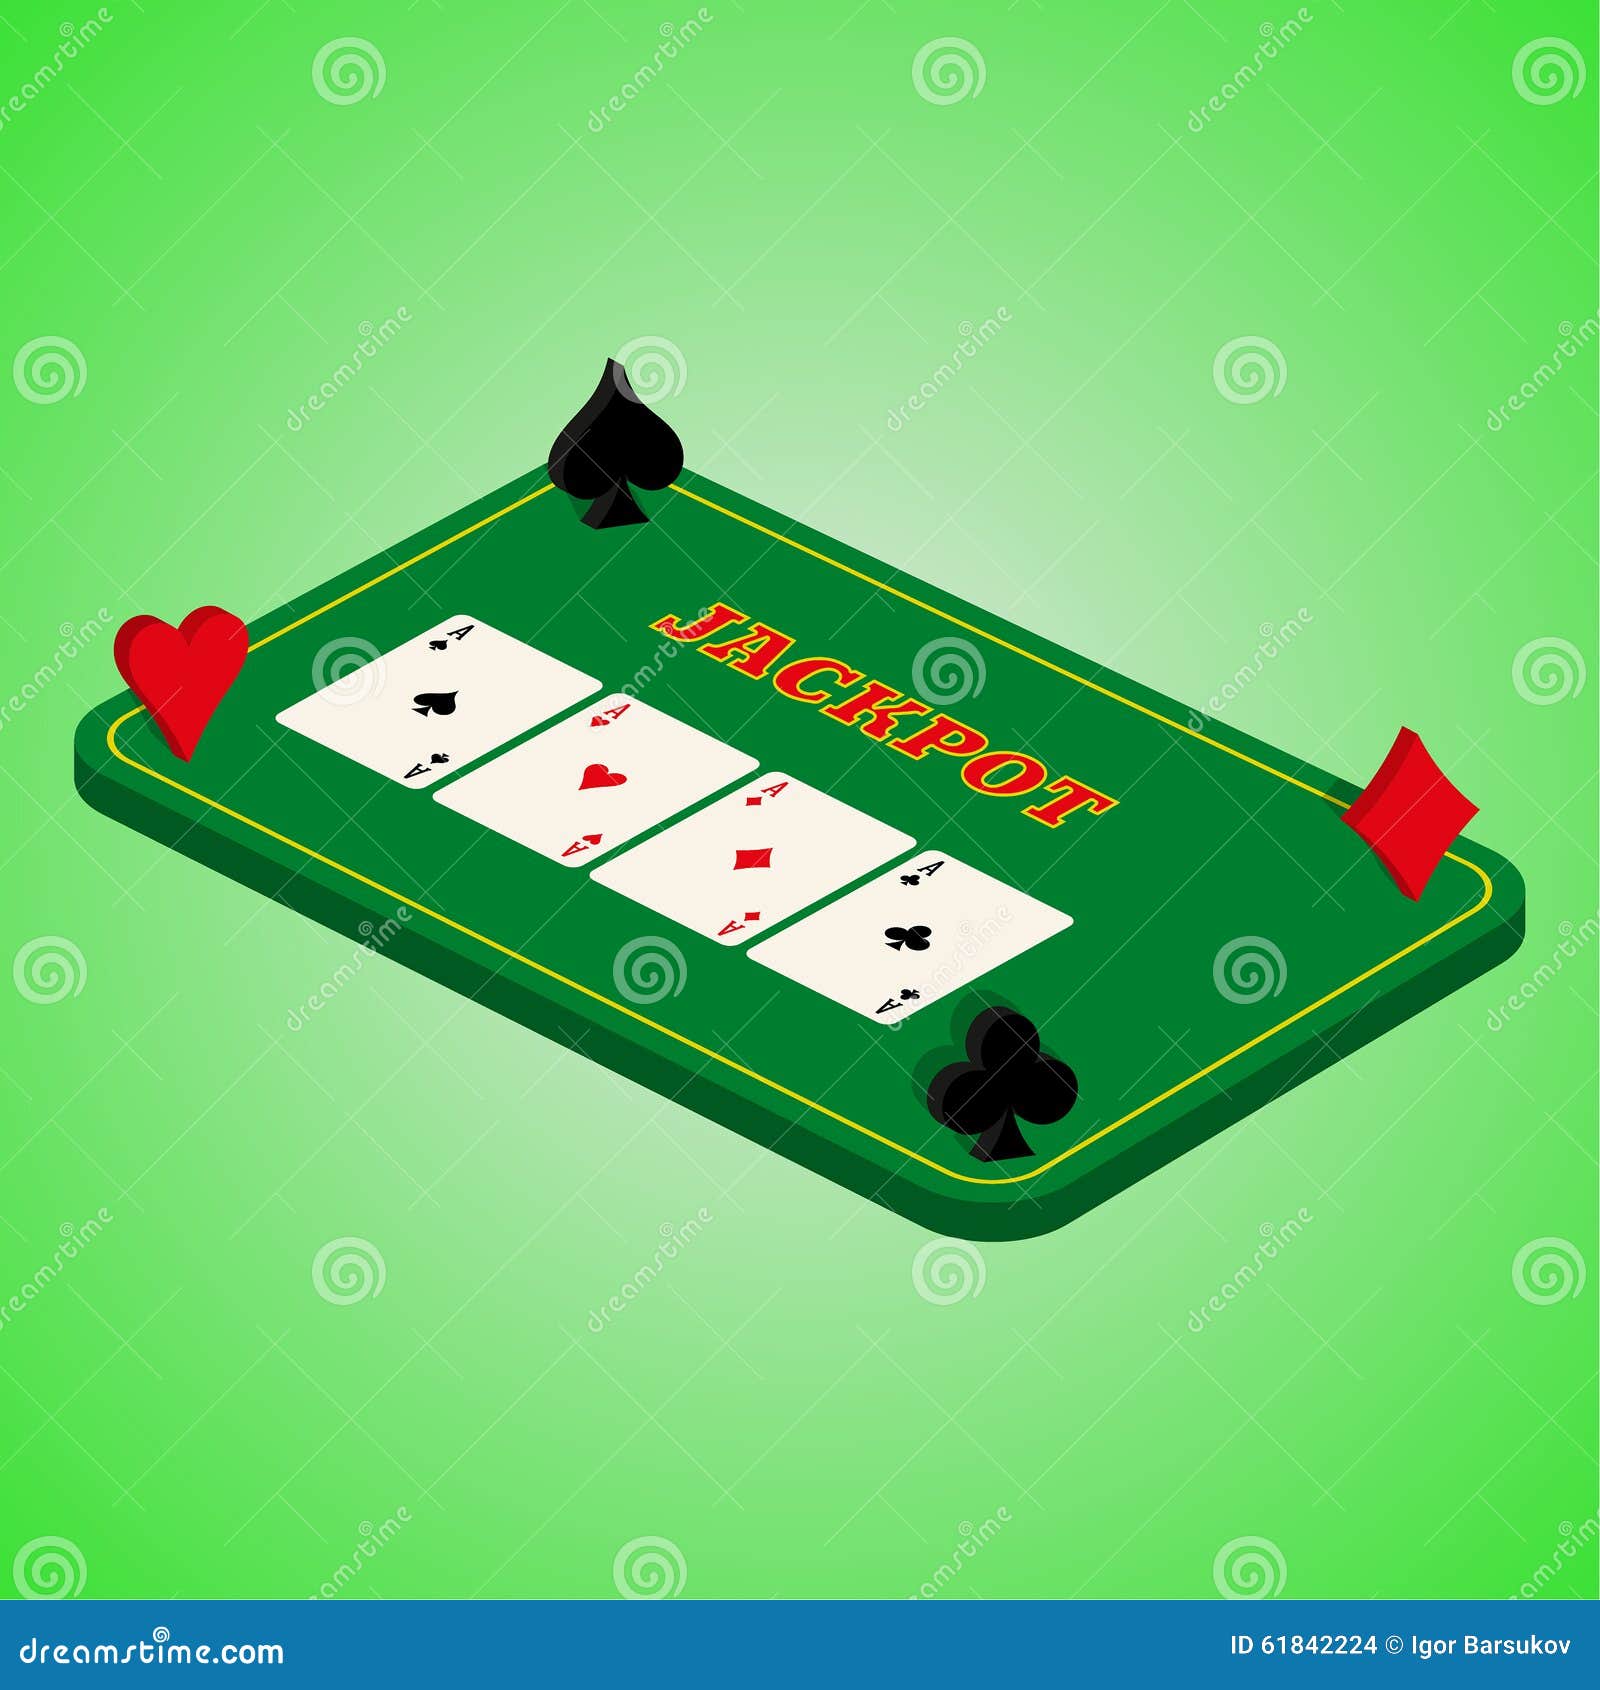 Casino Table Game Design